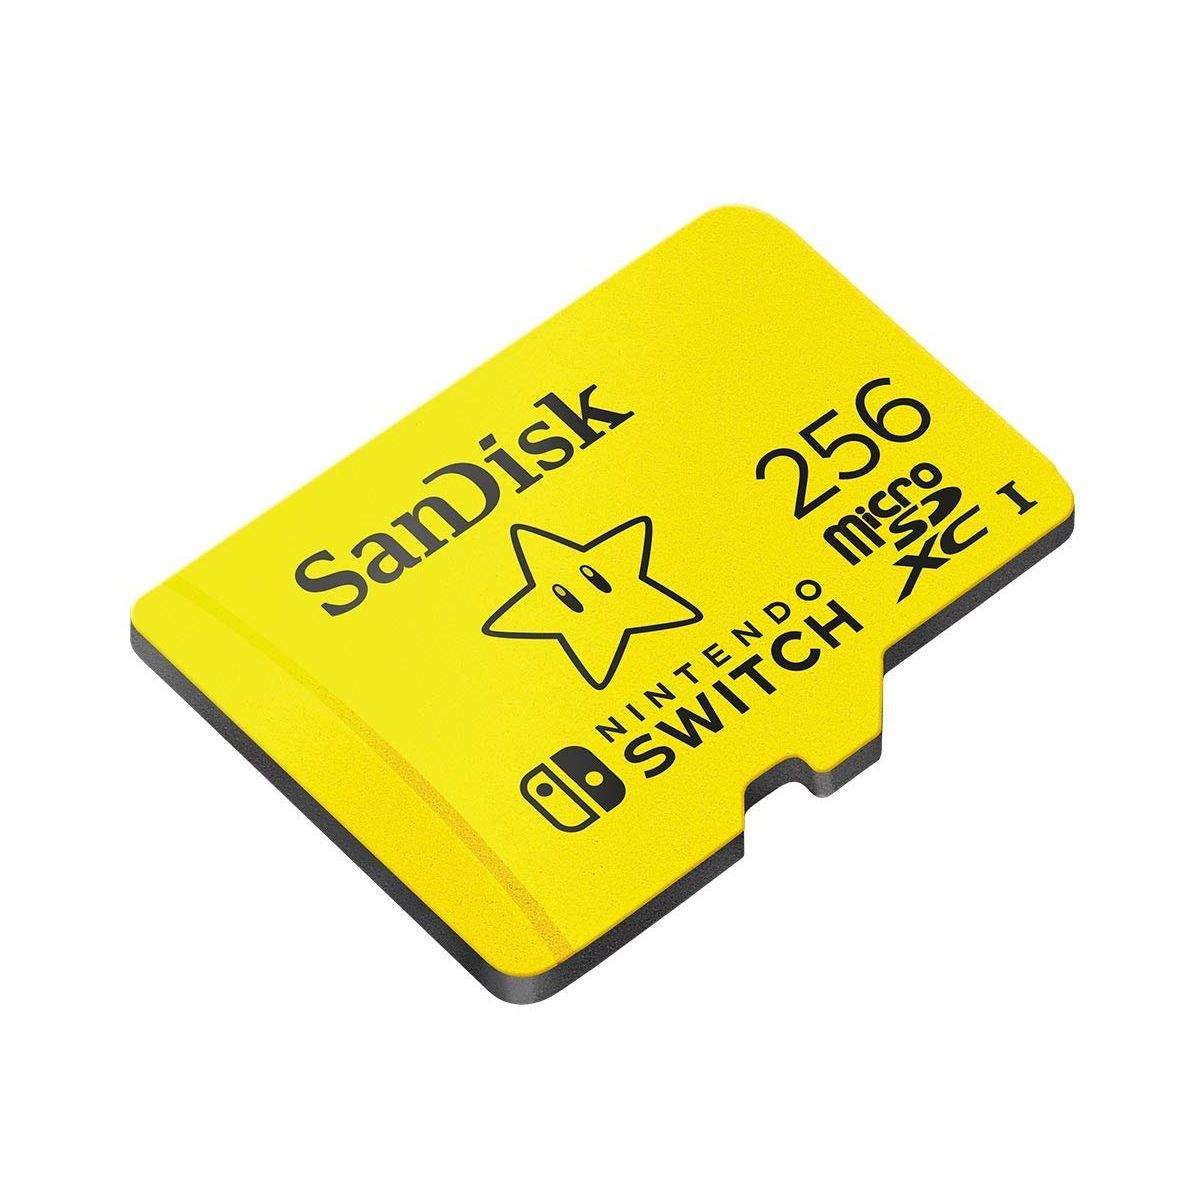 Carte Micro SD ESSENTIELB 256GO Micro SDXC Performances